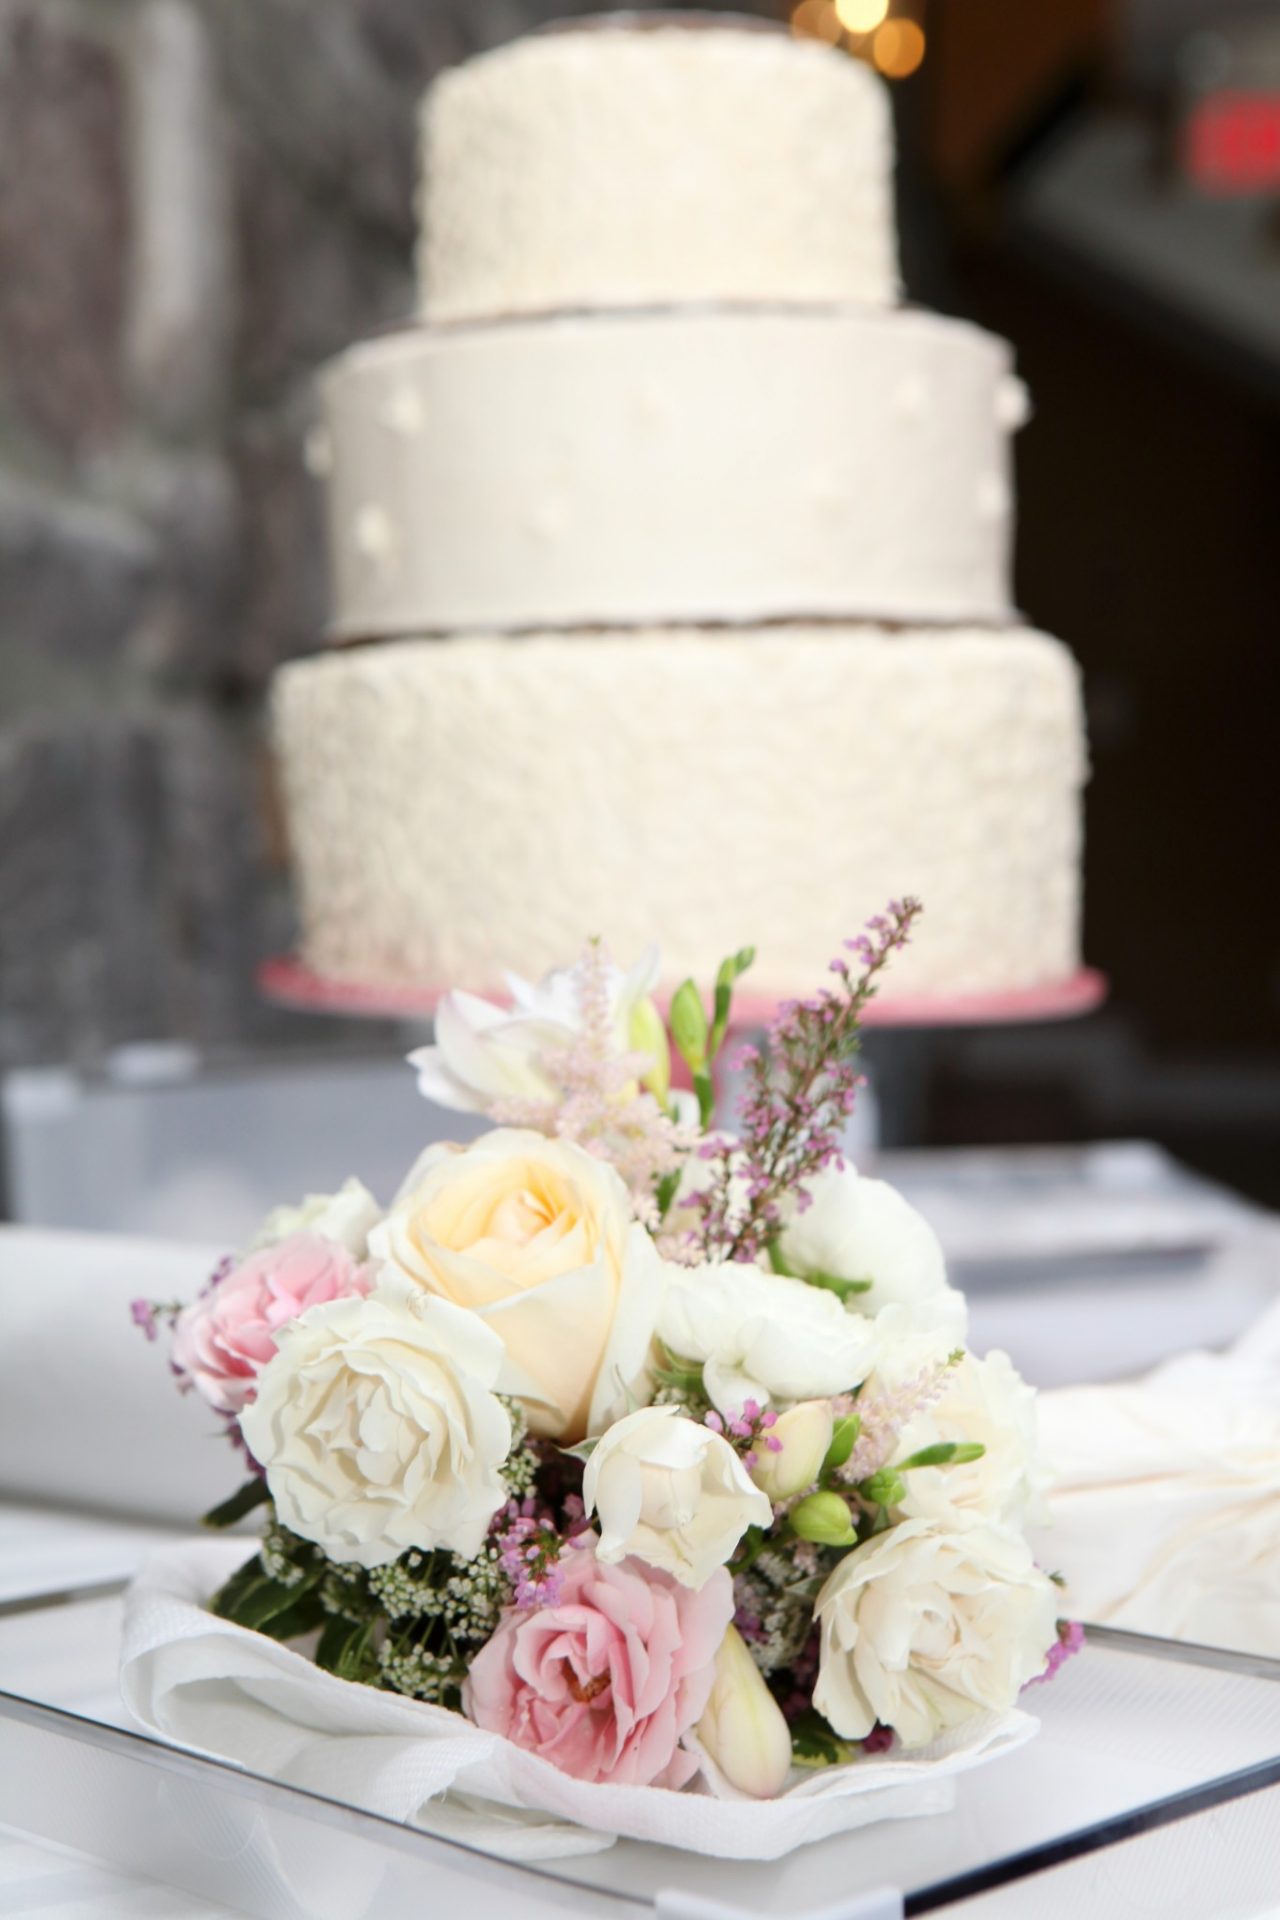 Wedding Reception wedding cake side view